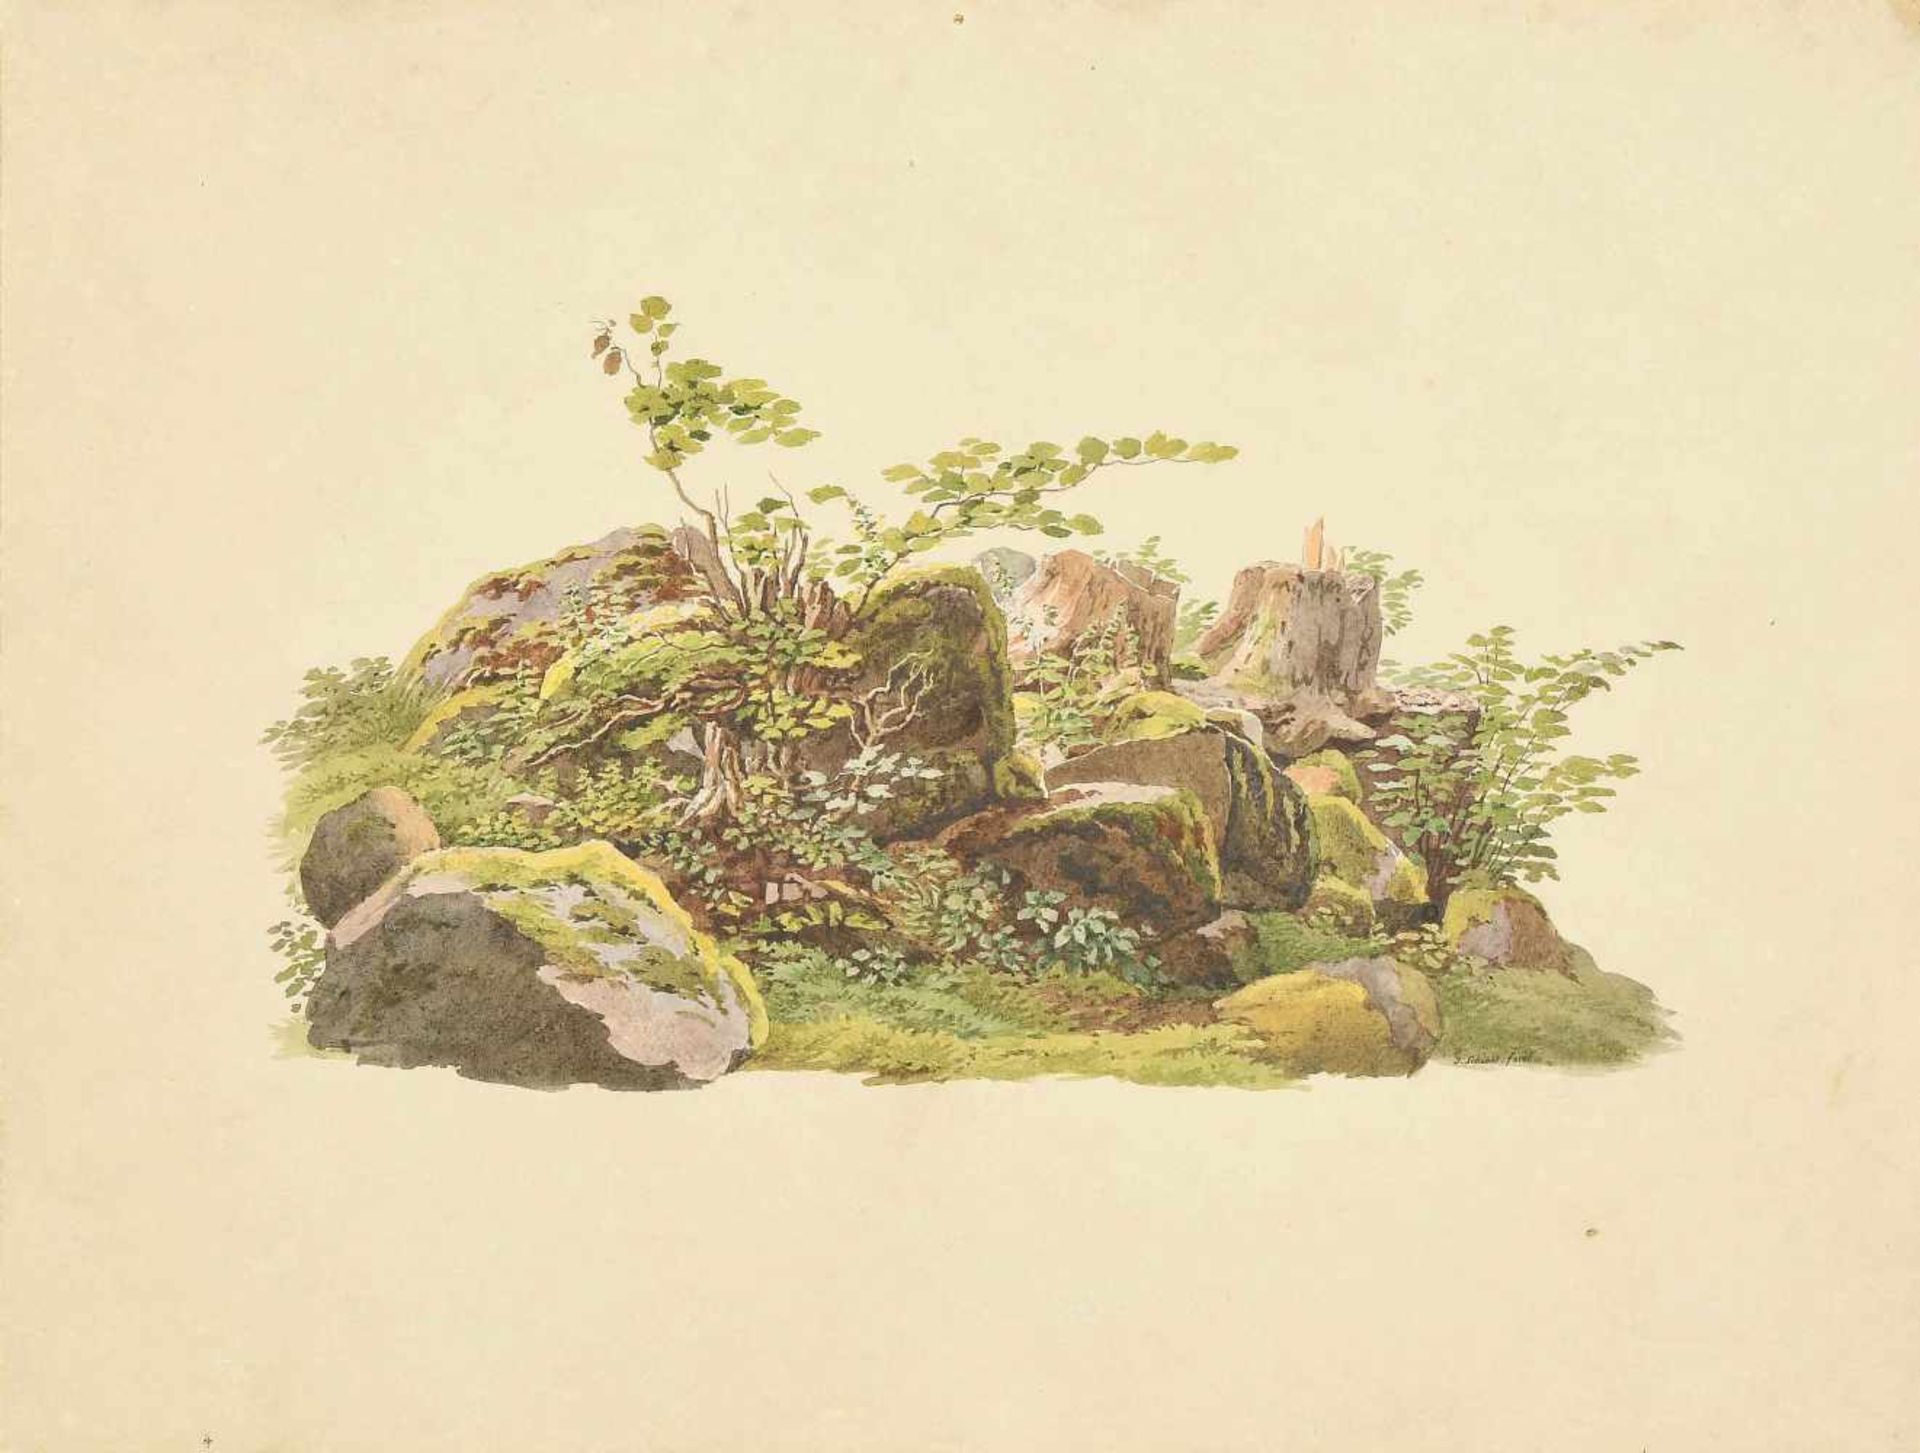 Freuler, Bernhard(1796 Schaffhausen 1858) Studienbuch. 60 n. n. Bll. Qu'4°. Grüner Maroquinbd. d. Z. - Bild 2 aus 5